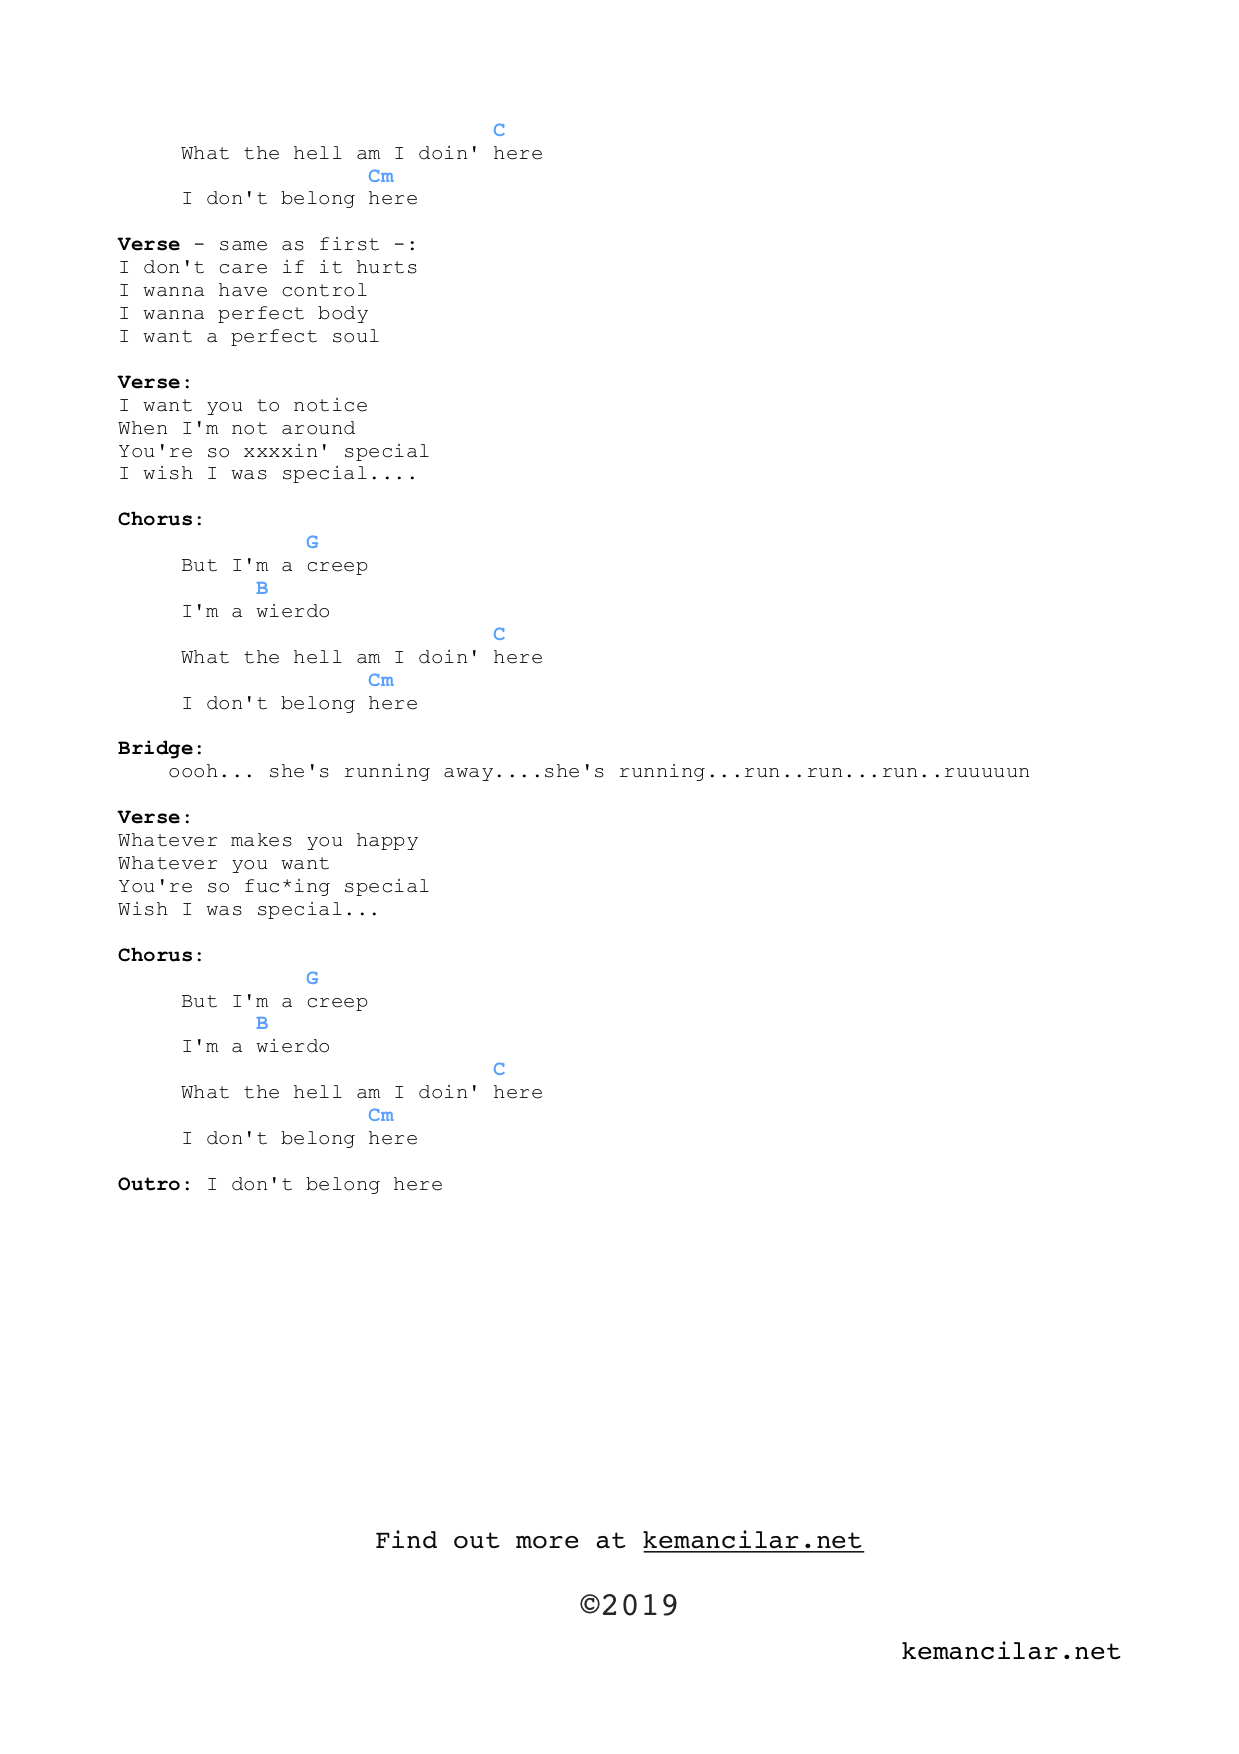 CREEP - Beginner Uke Chord Chart PDF, PDF